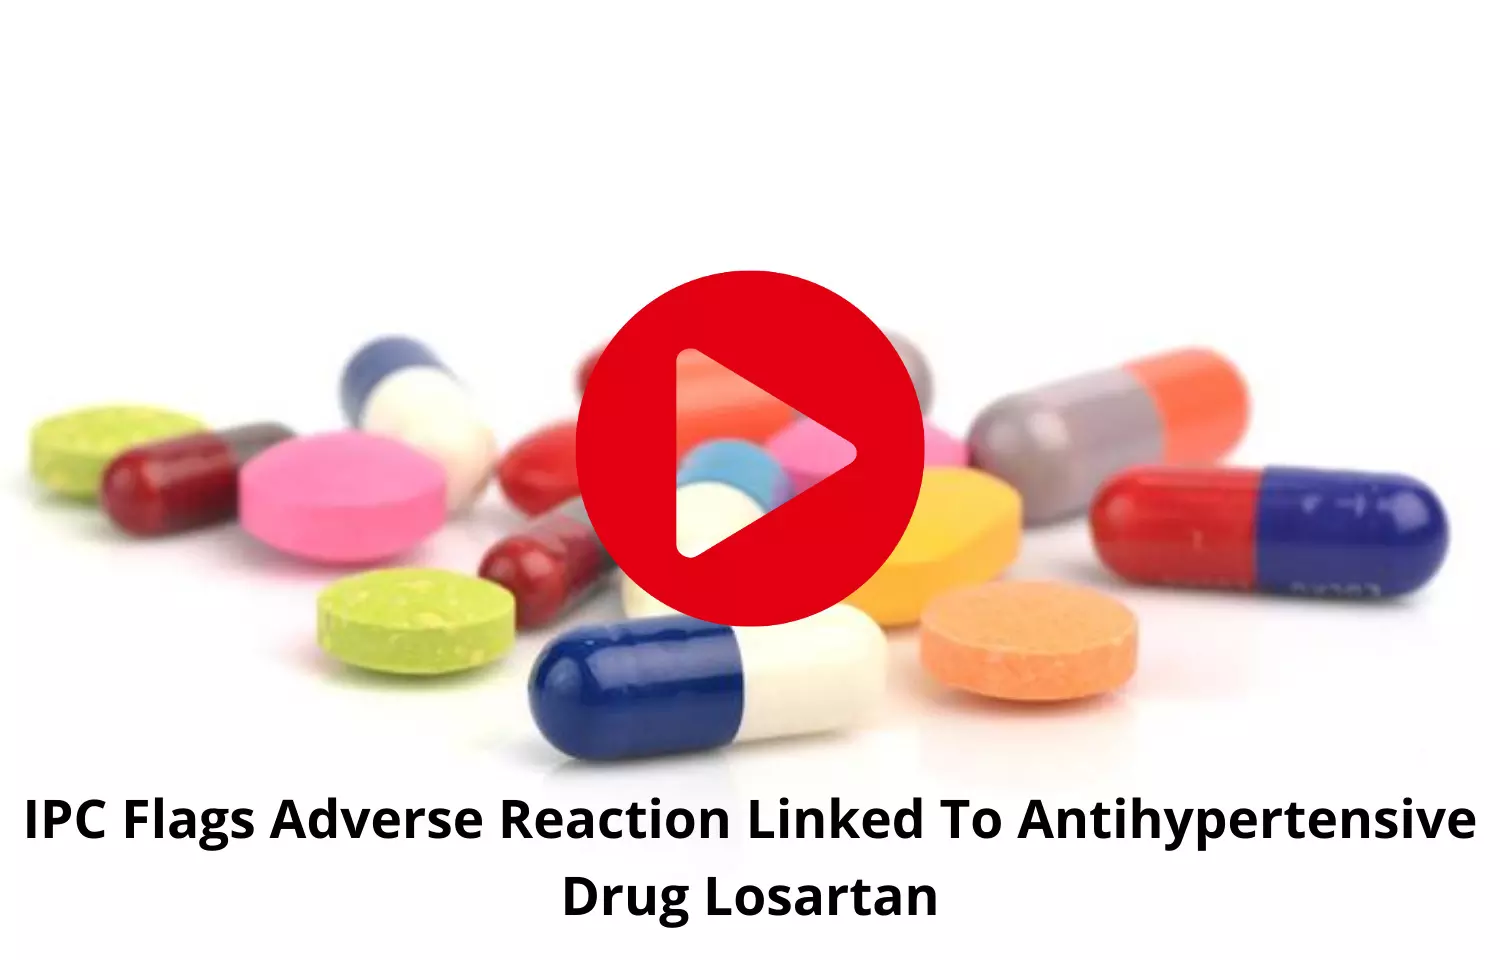 IPC Flags on Adverse Reaction Linked To Antihypertensive Drug Losartan